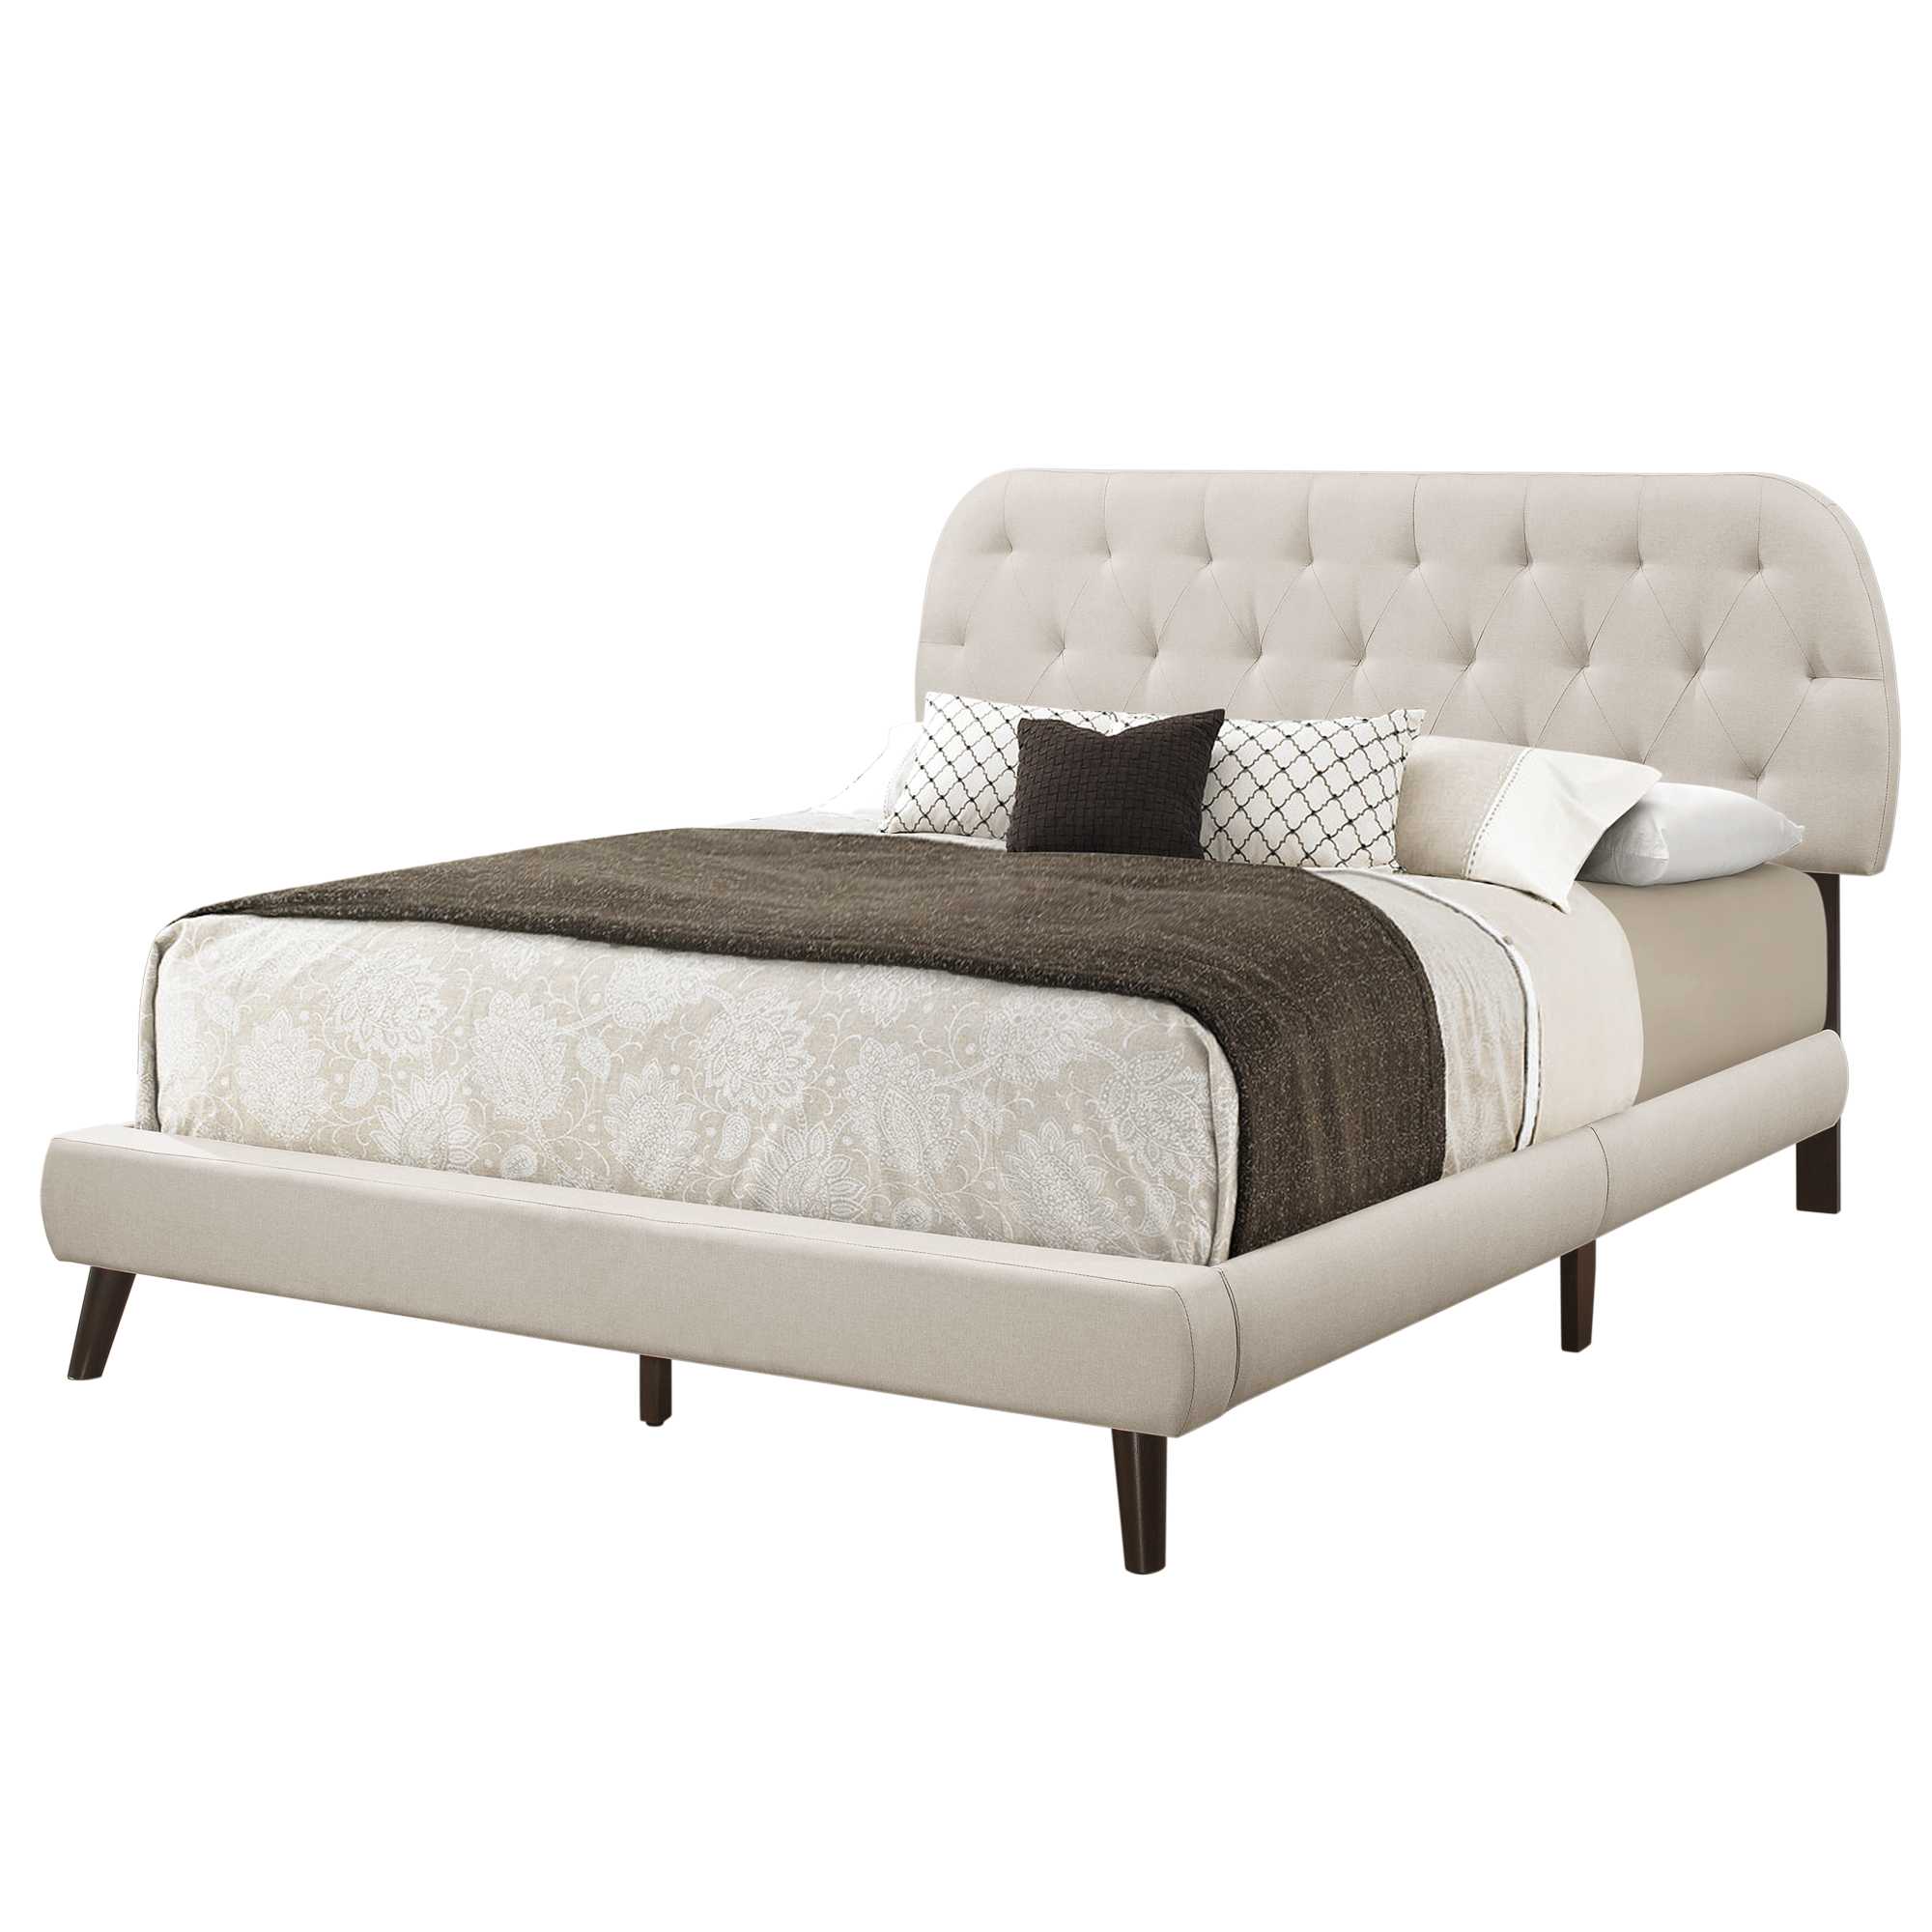 70.5" x 87.25" x 45.25" Beige Foam Solid Wood Linen Queen Sized Bed With Wood Legs